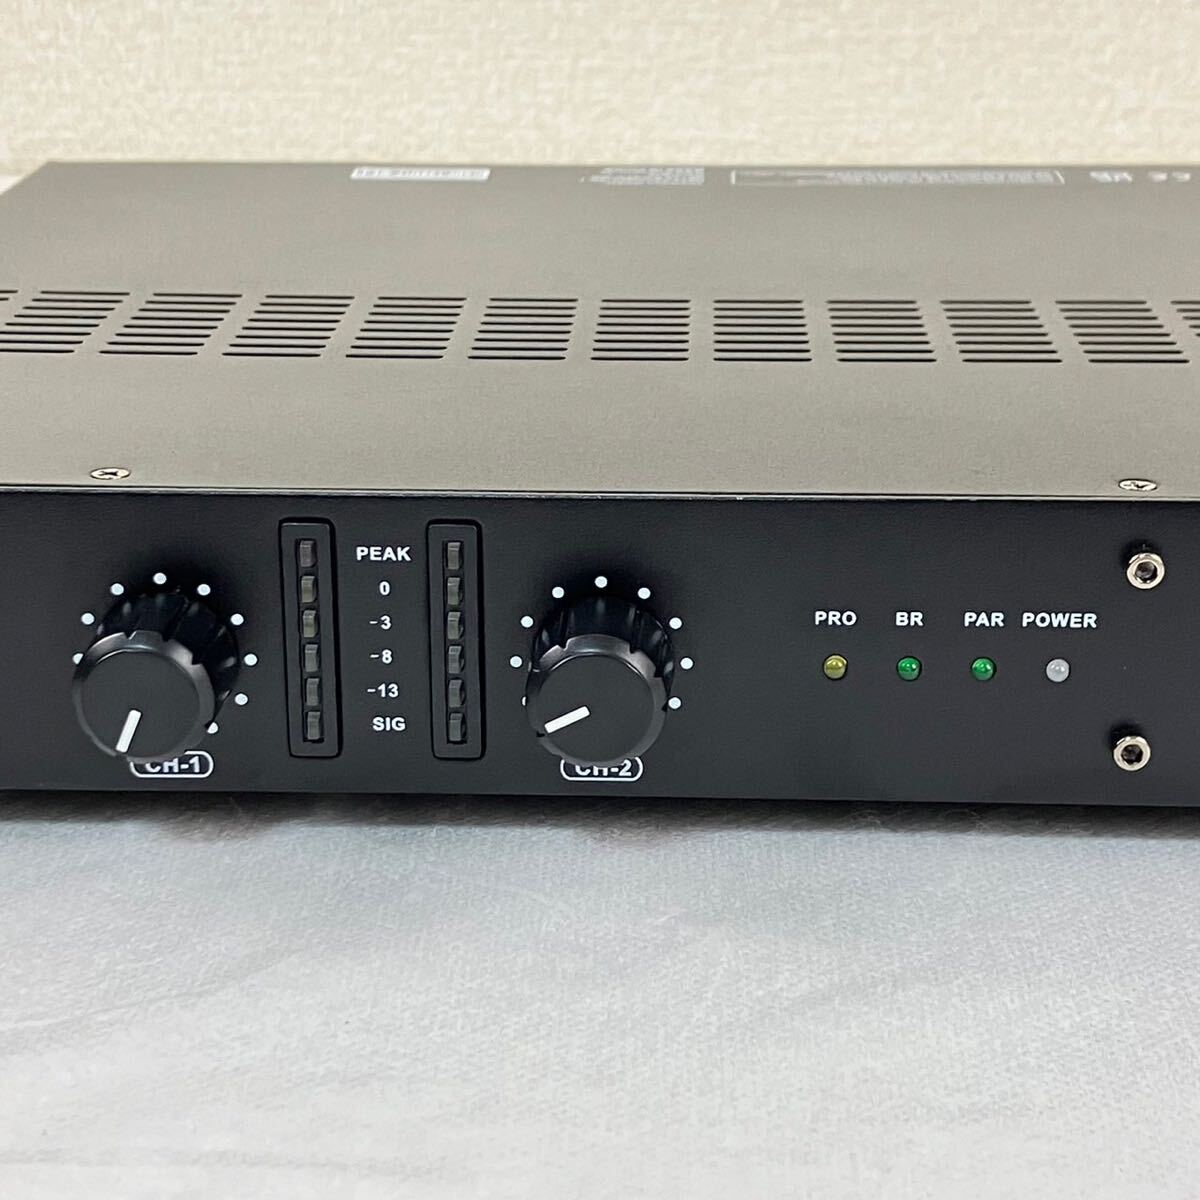 the tt.amp Thomann S-75 MkⅡ power amplifier Pro amplifier audio equipment 